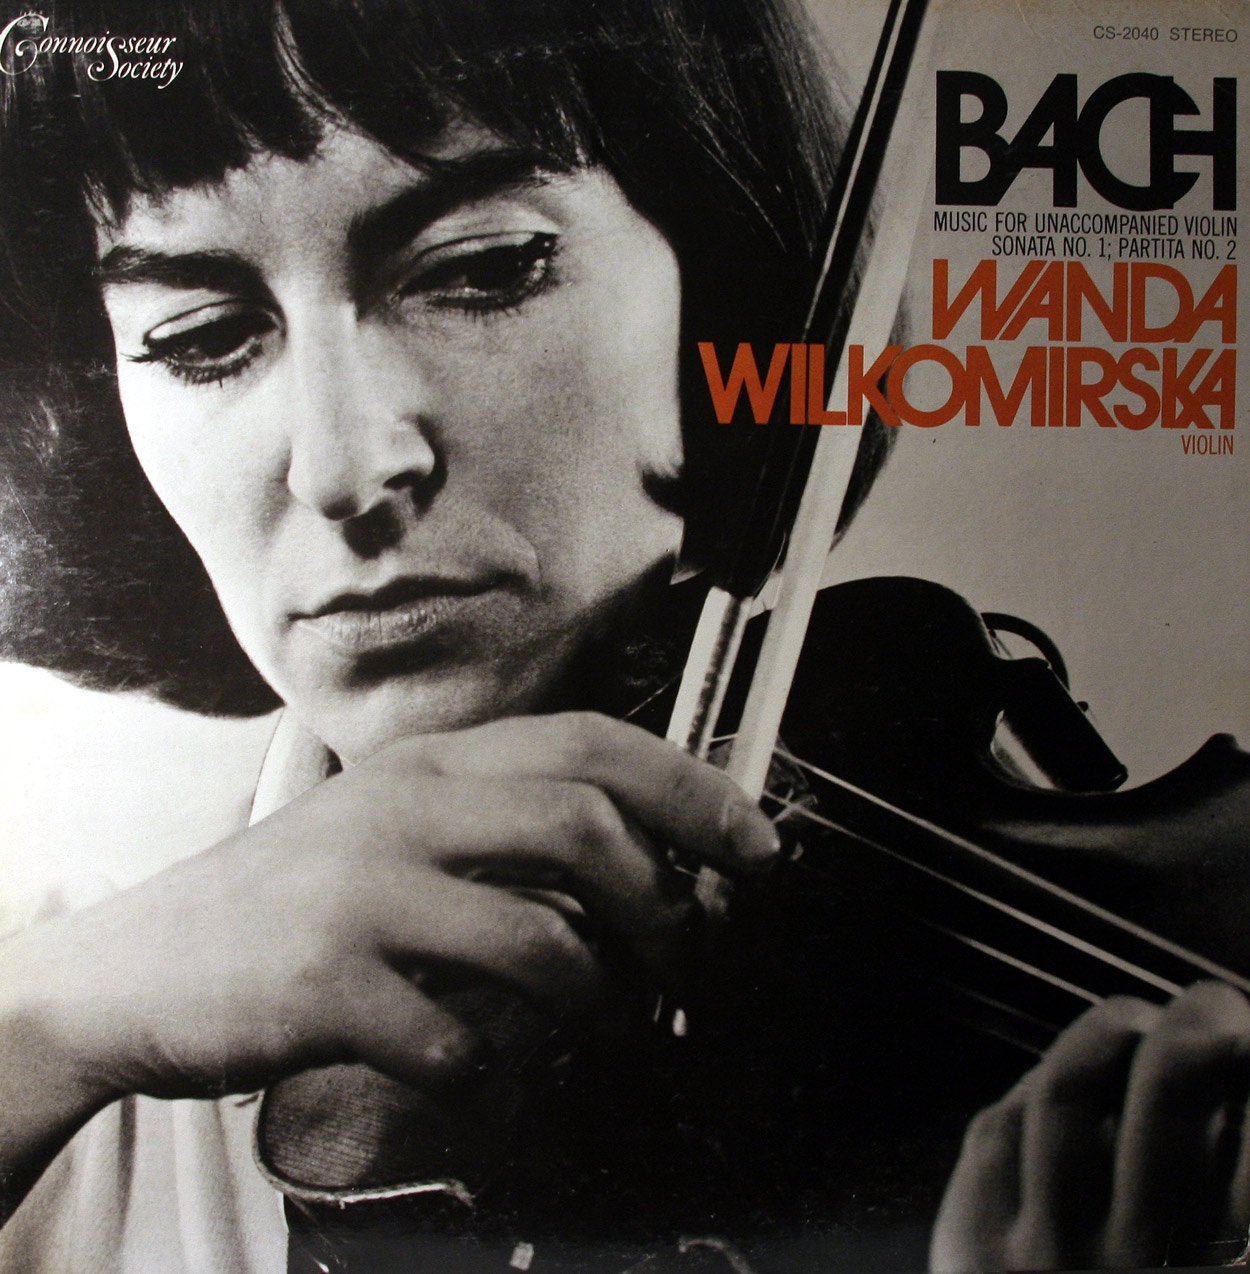 WANDA WILKOMIRSKA / ワンダ・ウィウコミルスカ / バッハ: 無伴奏ヴァイオリンのためのソナタ第1番 & パルティータ第2番